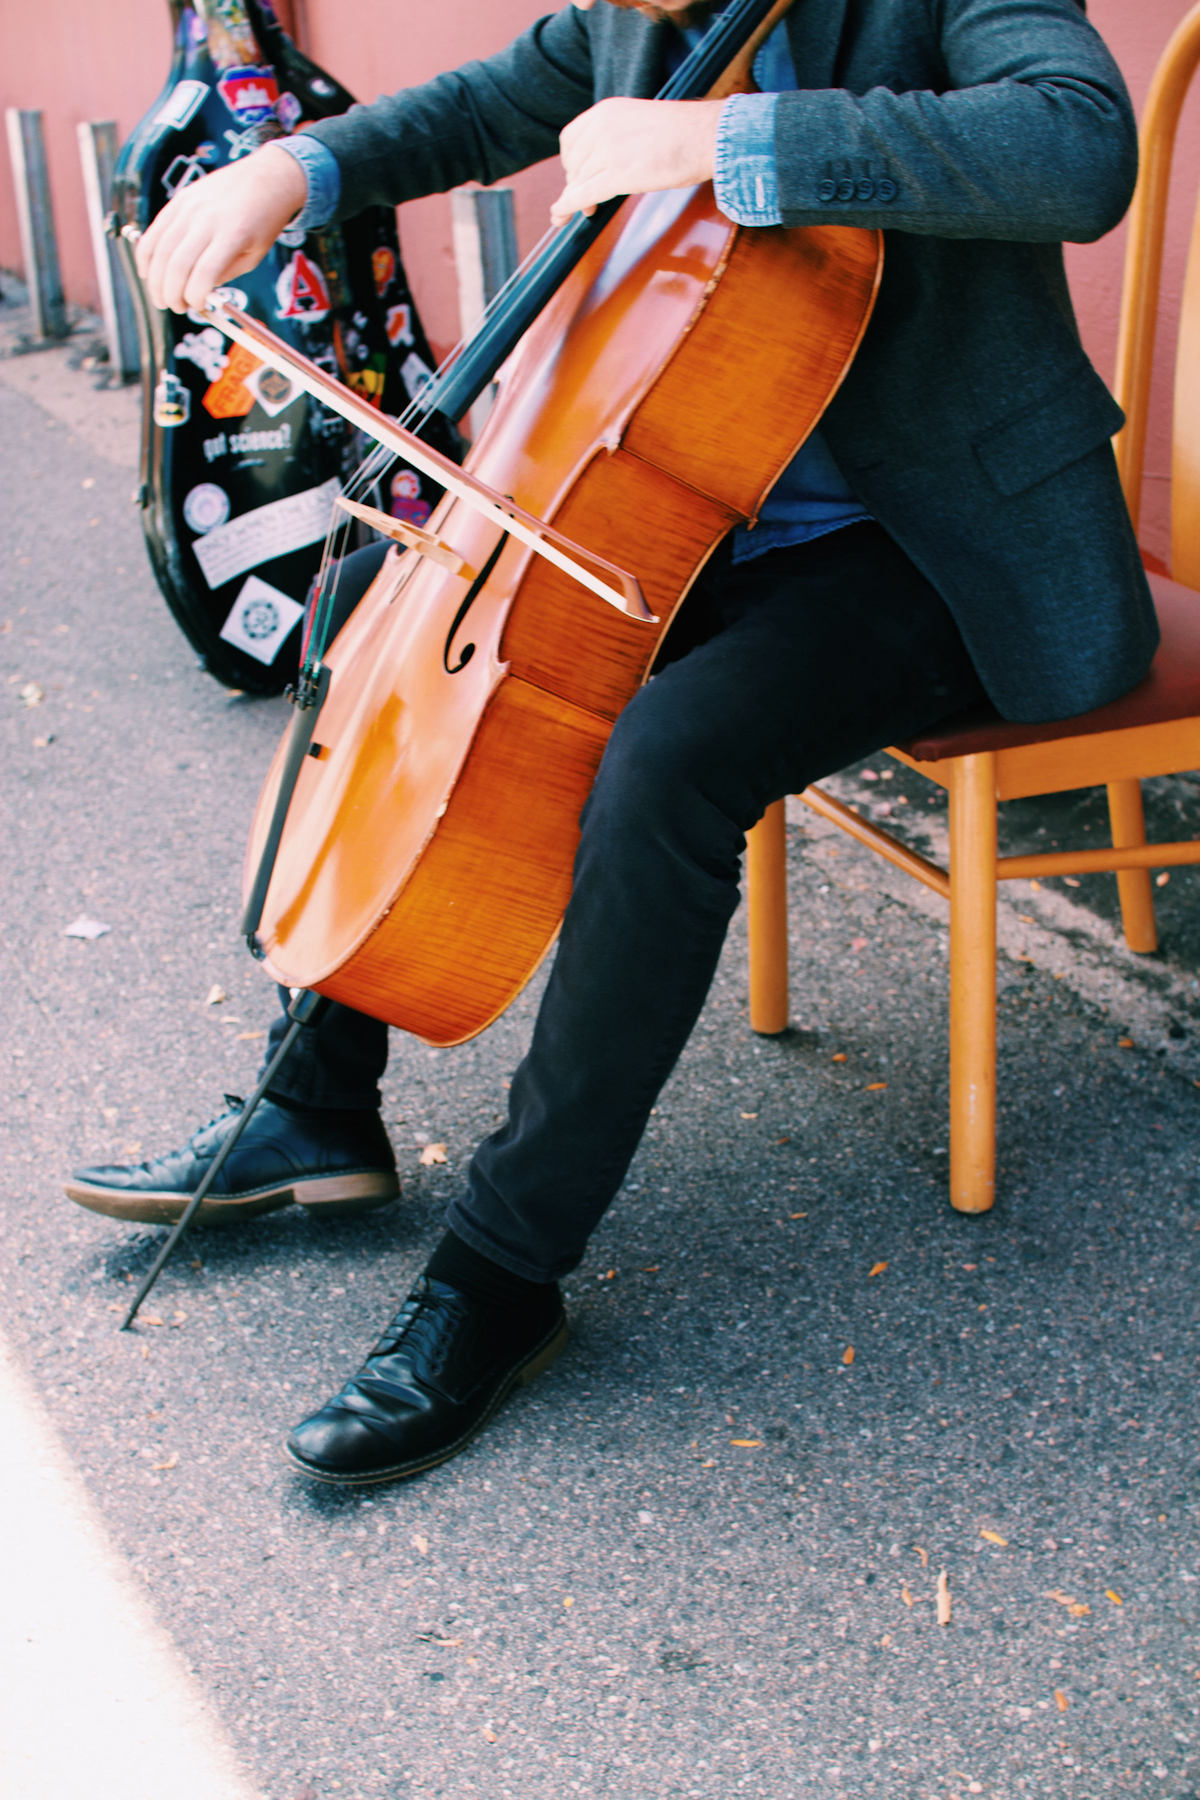 Joe playing the cello.